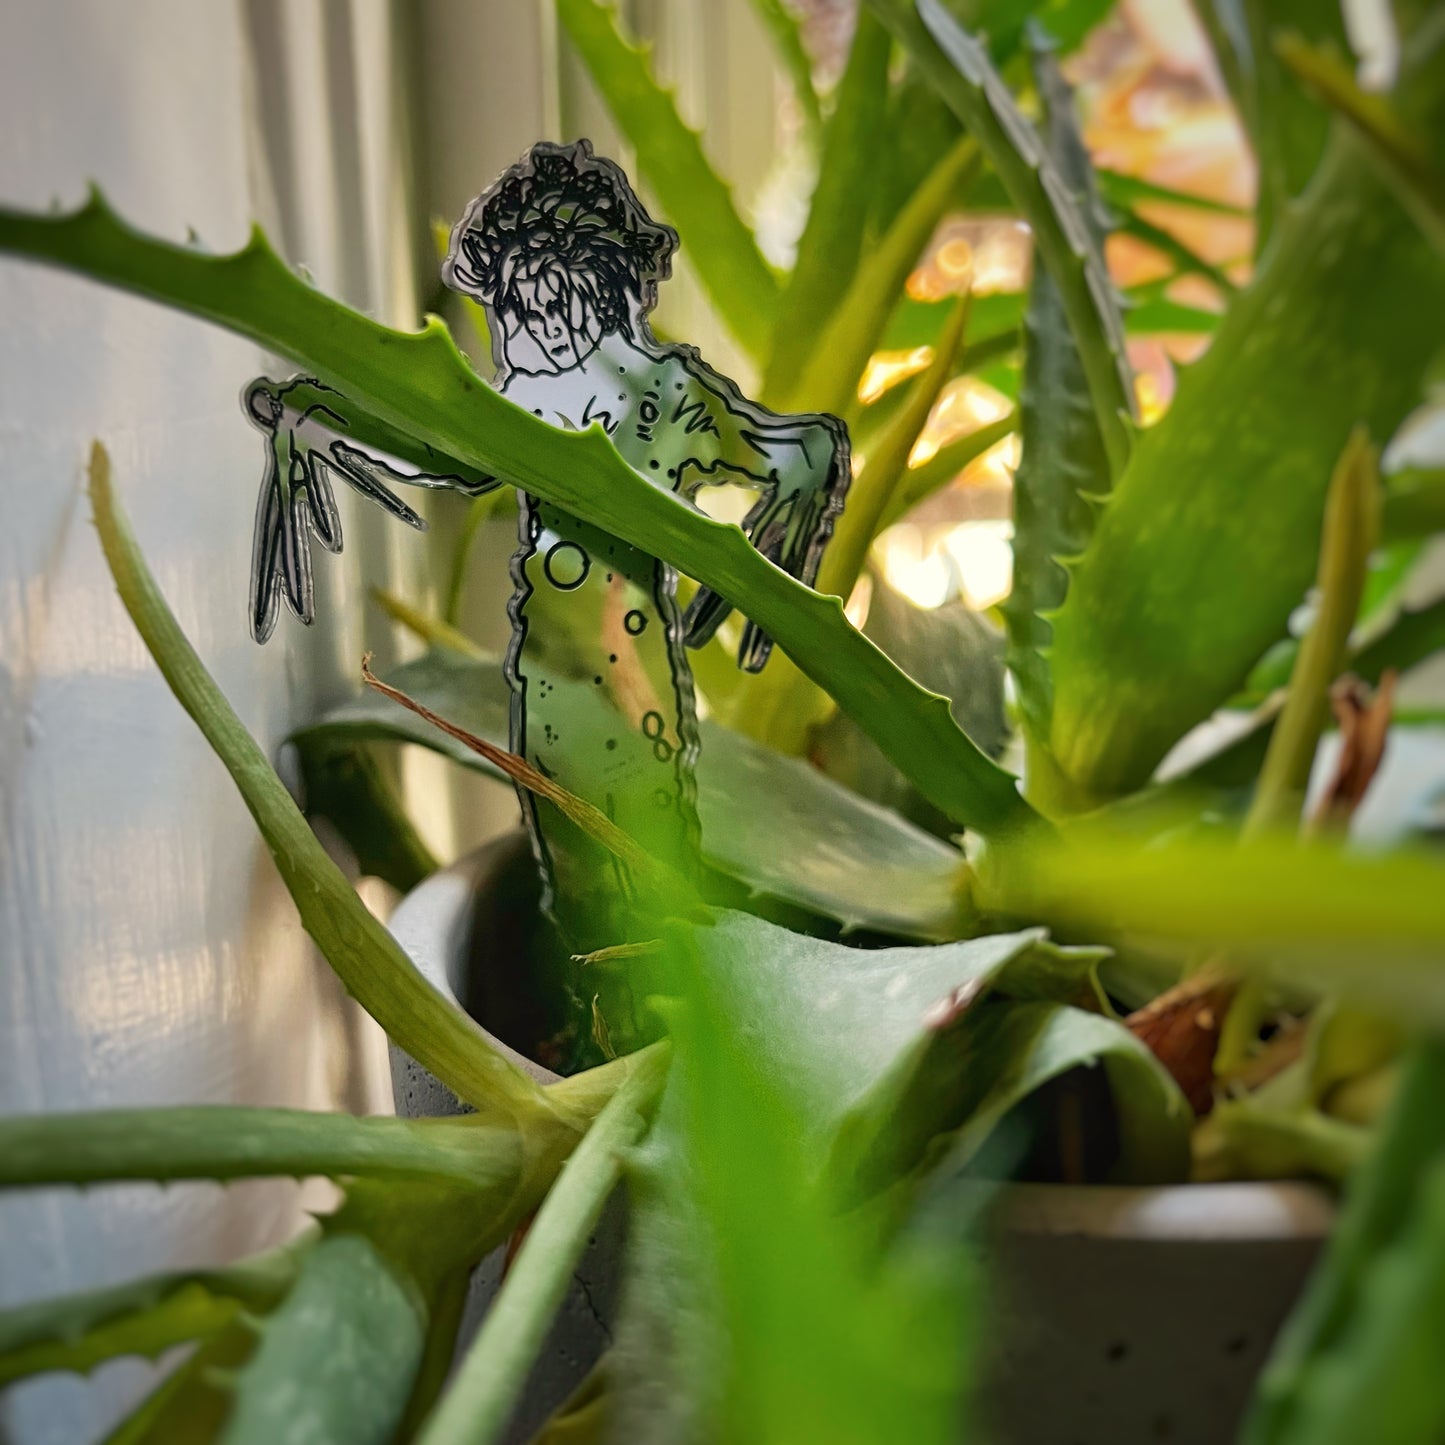 Edward Scissorhands Inspired Plant Stake